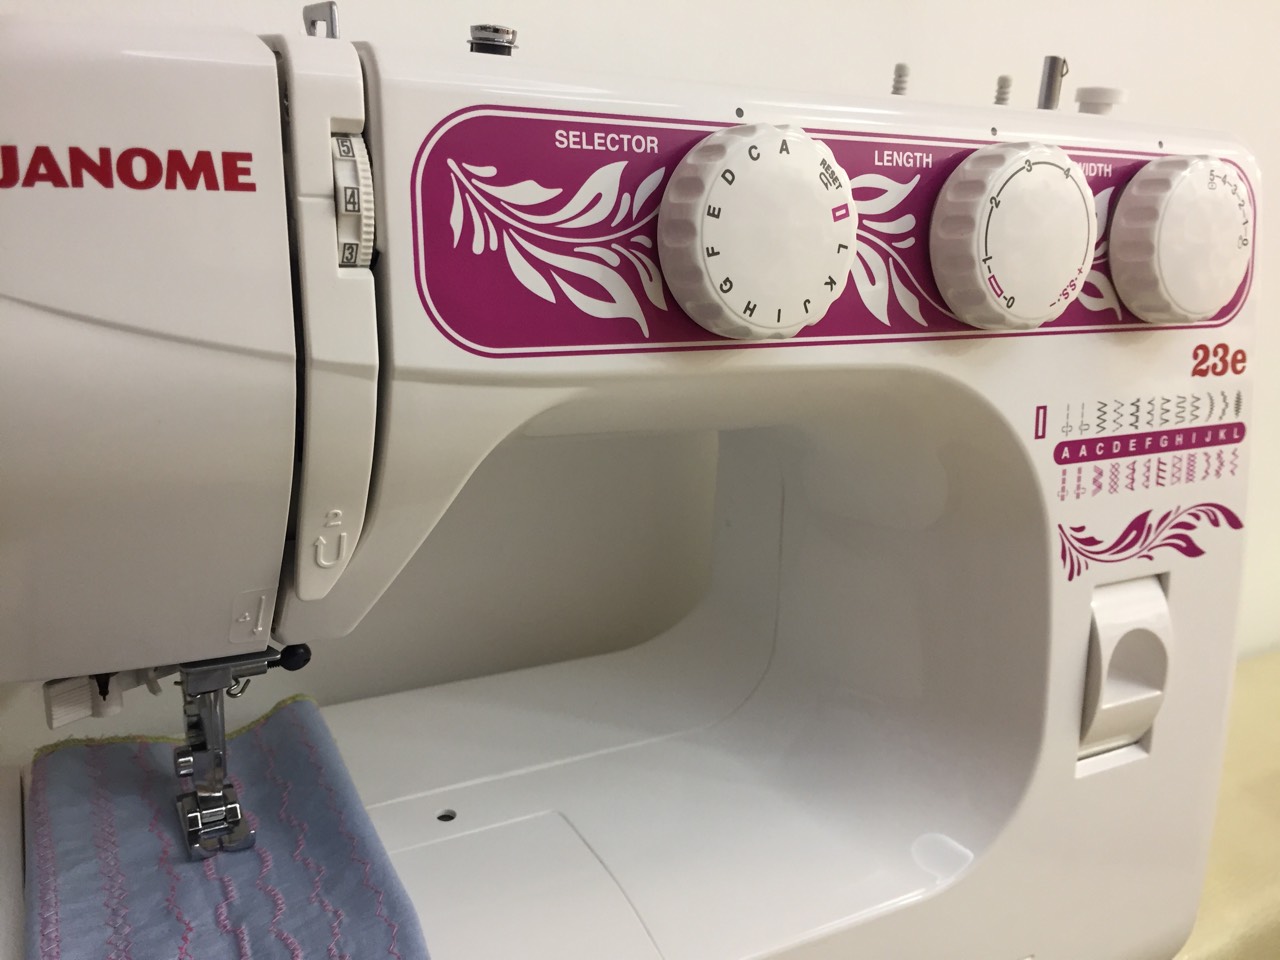 Janome 23e — купить швейную машинку Janome 23e | интернет-магазин Папа Швей